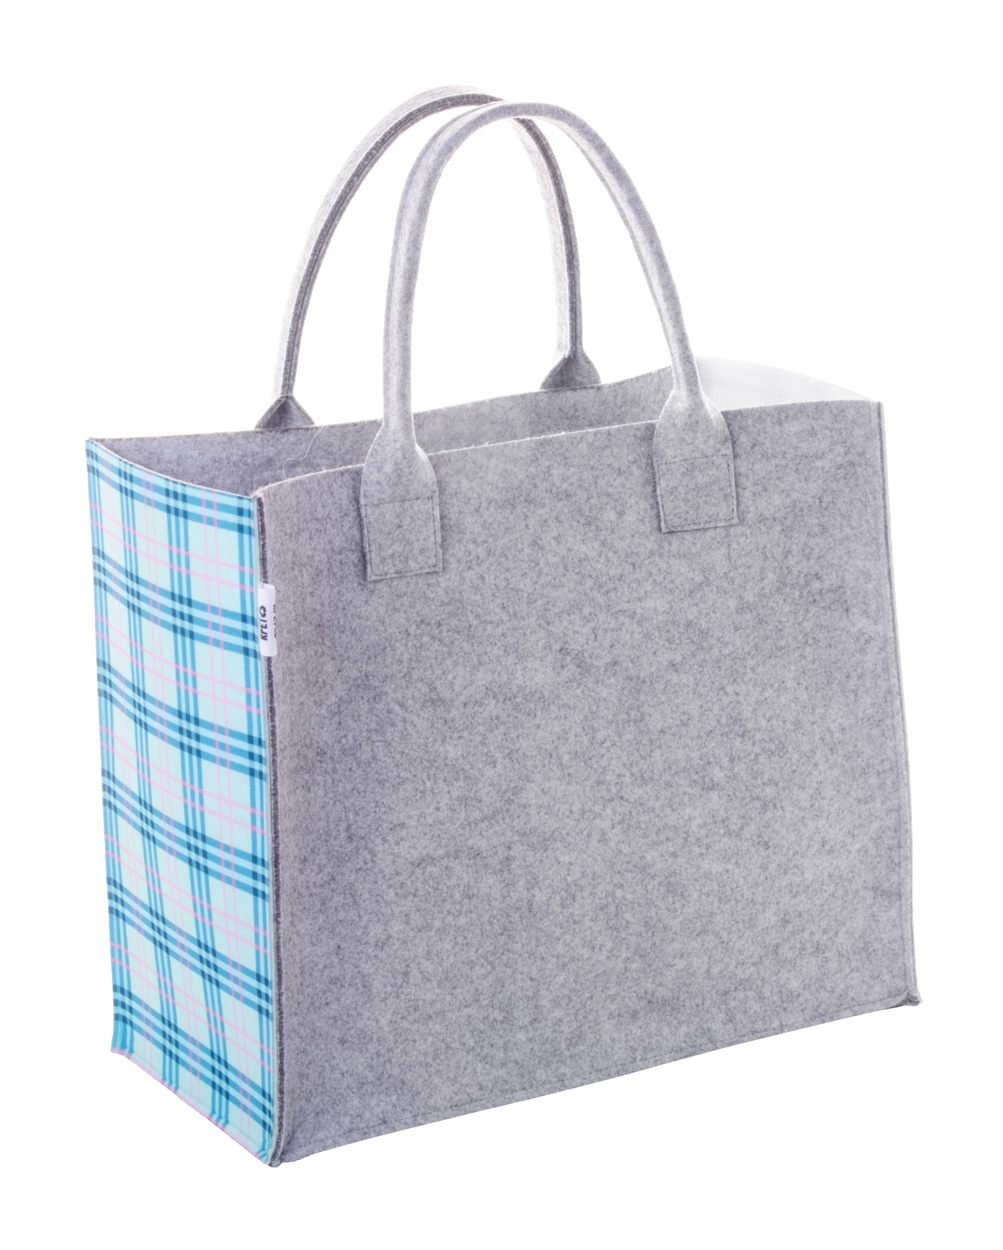 CreaFelt Shop B shopping bag made to order - grey